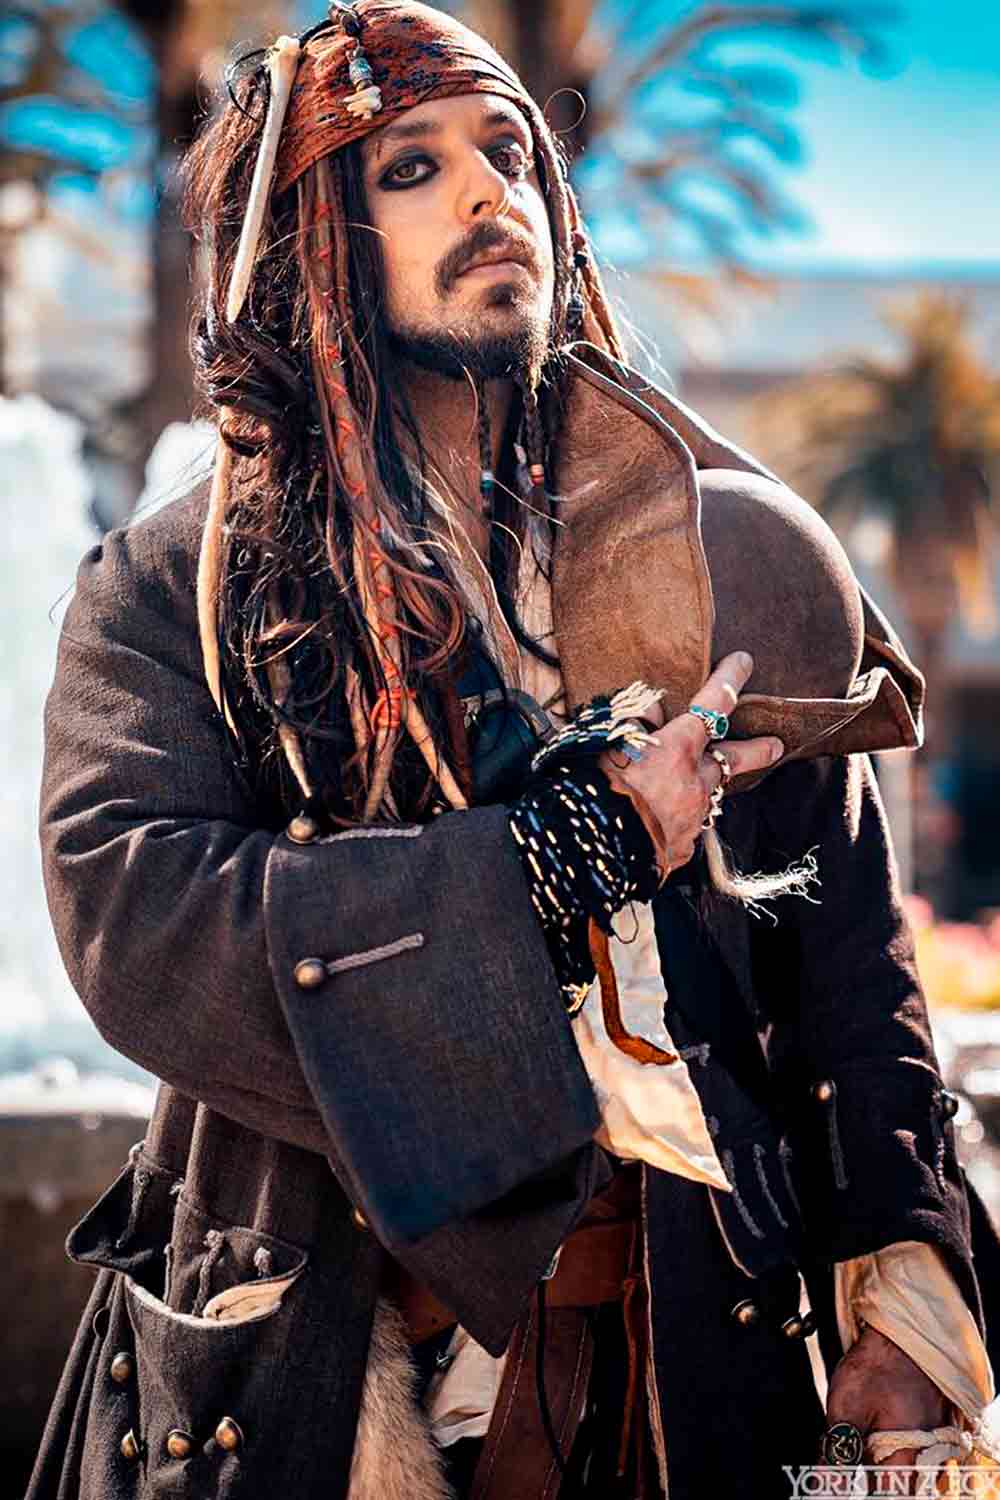 Captain Jack Sparrow #menshalloweencostumes #haloweencostumeideasmen #halloweencostumes